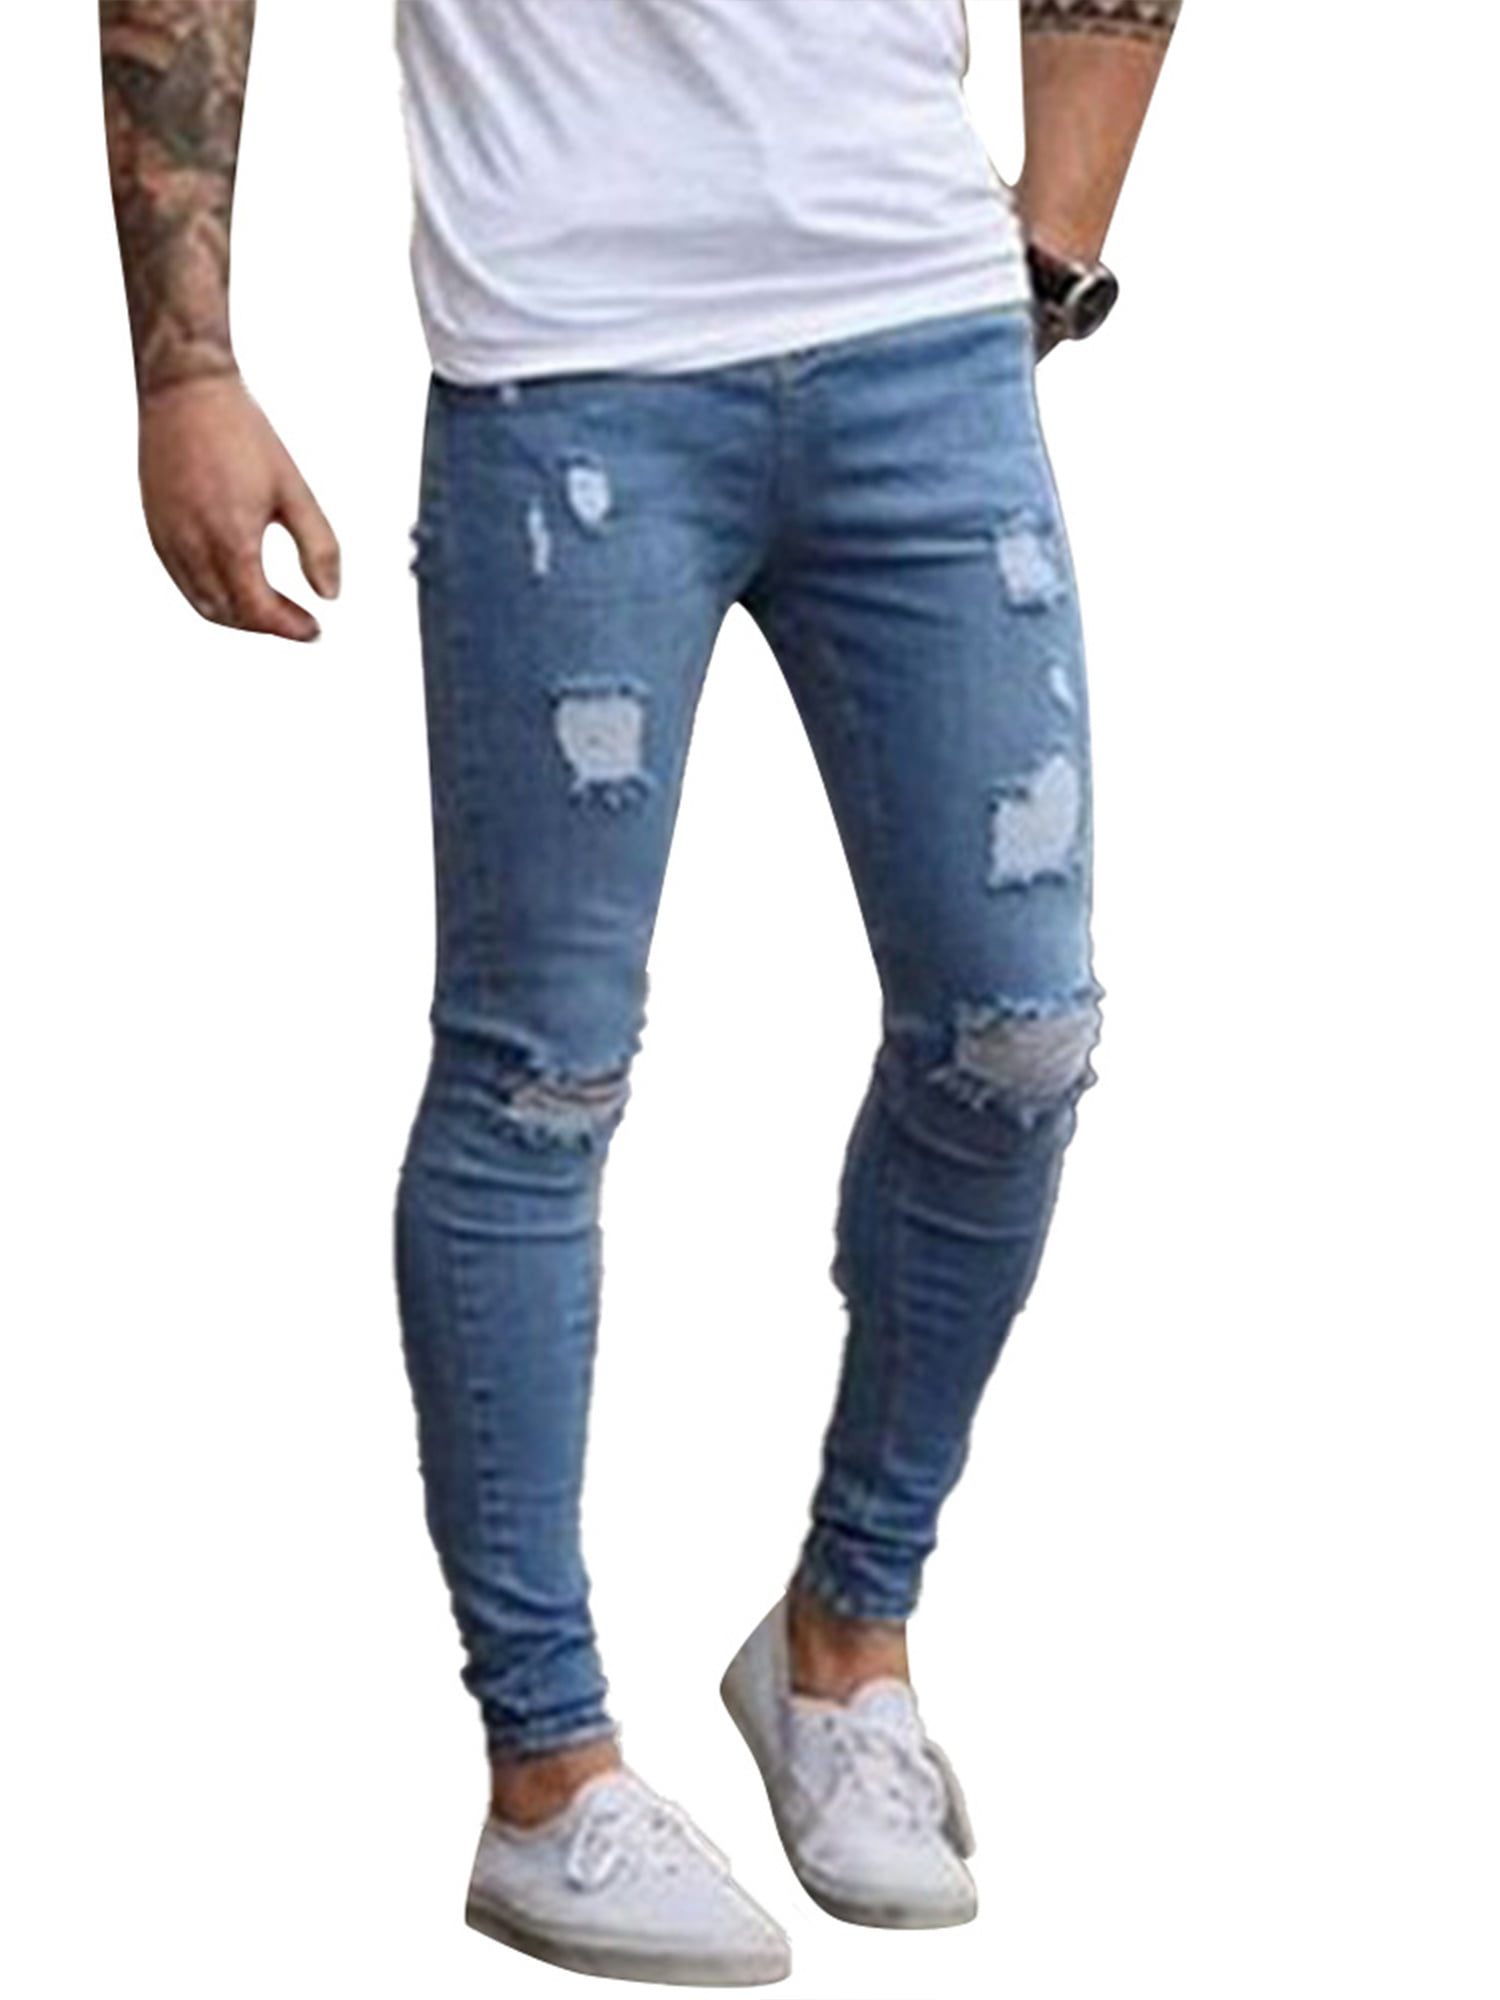 FEIMEN Fashion Mens Skinny Ripped Destroyed Distressed Jeans Plain Stretch  Frayed Slim Fit Jegging Pants Light Blue 3XL 